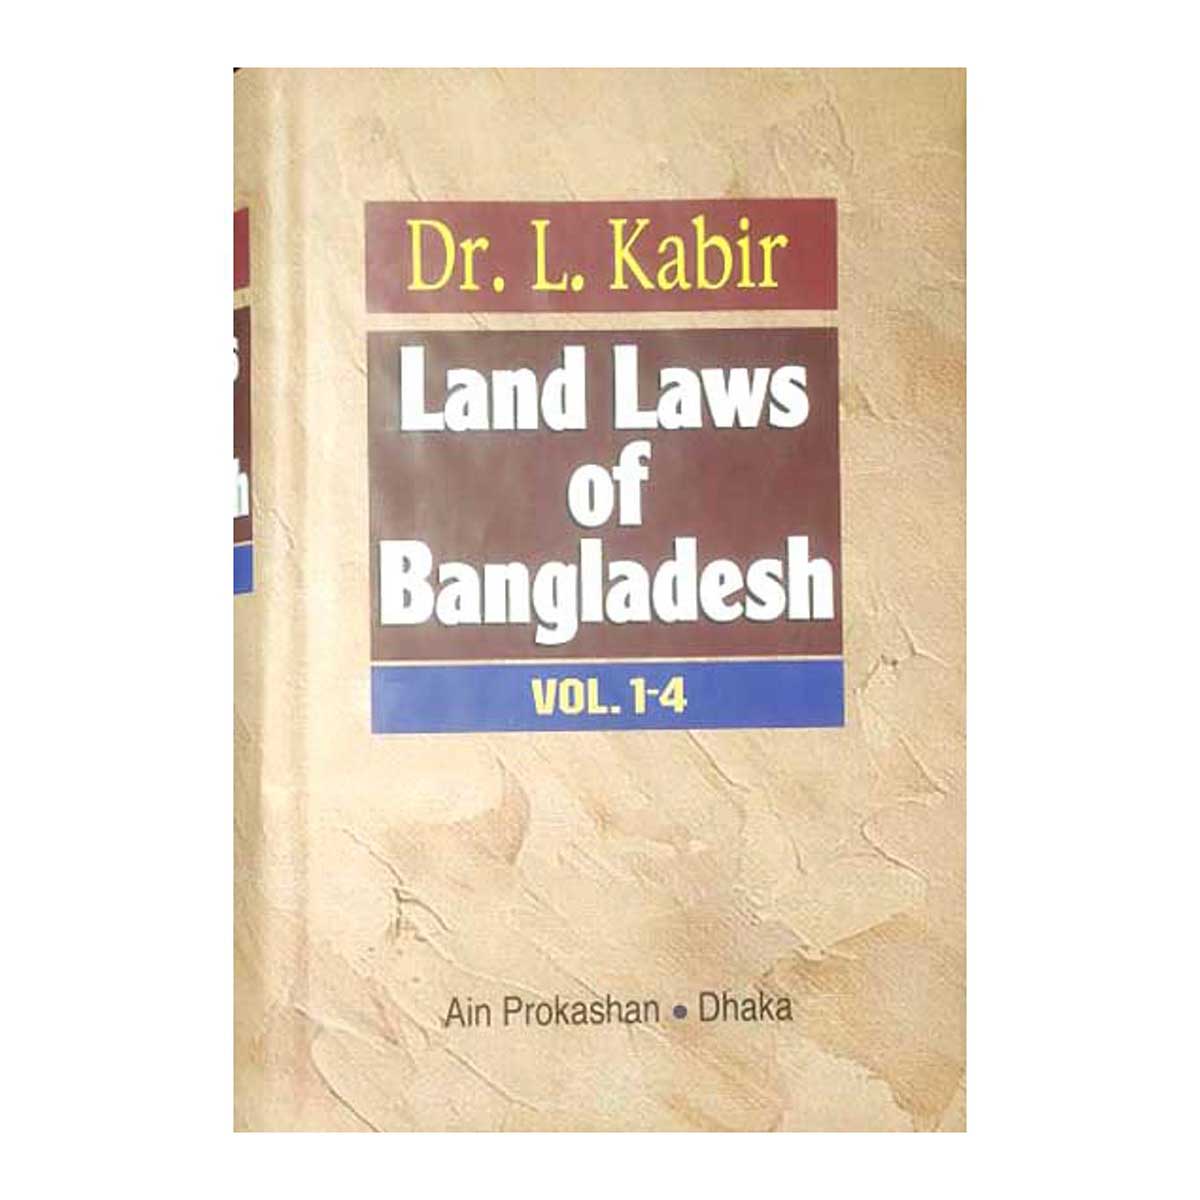 Dr. Land Laws of Bangladesh Vol. 1-4